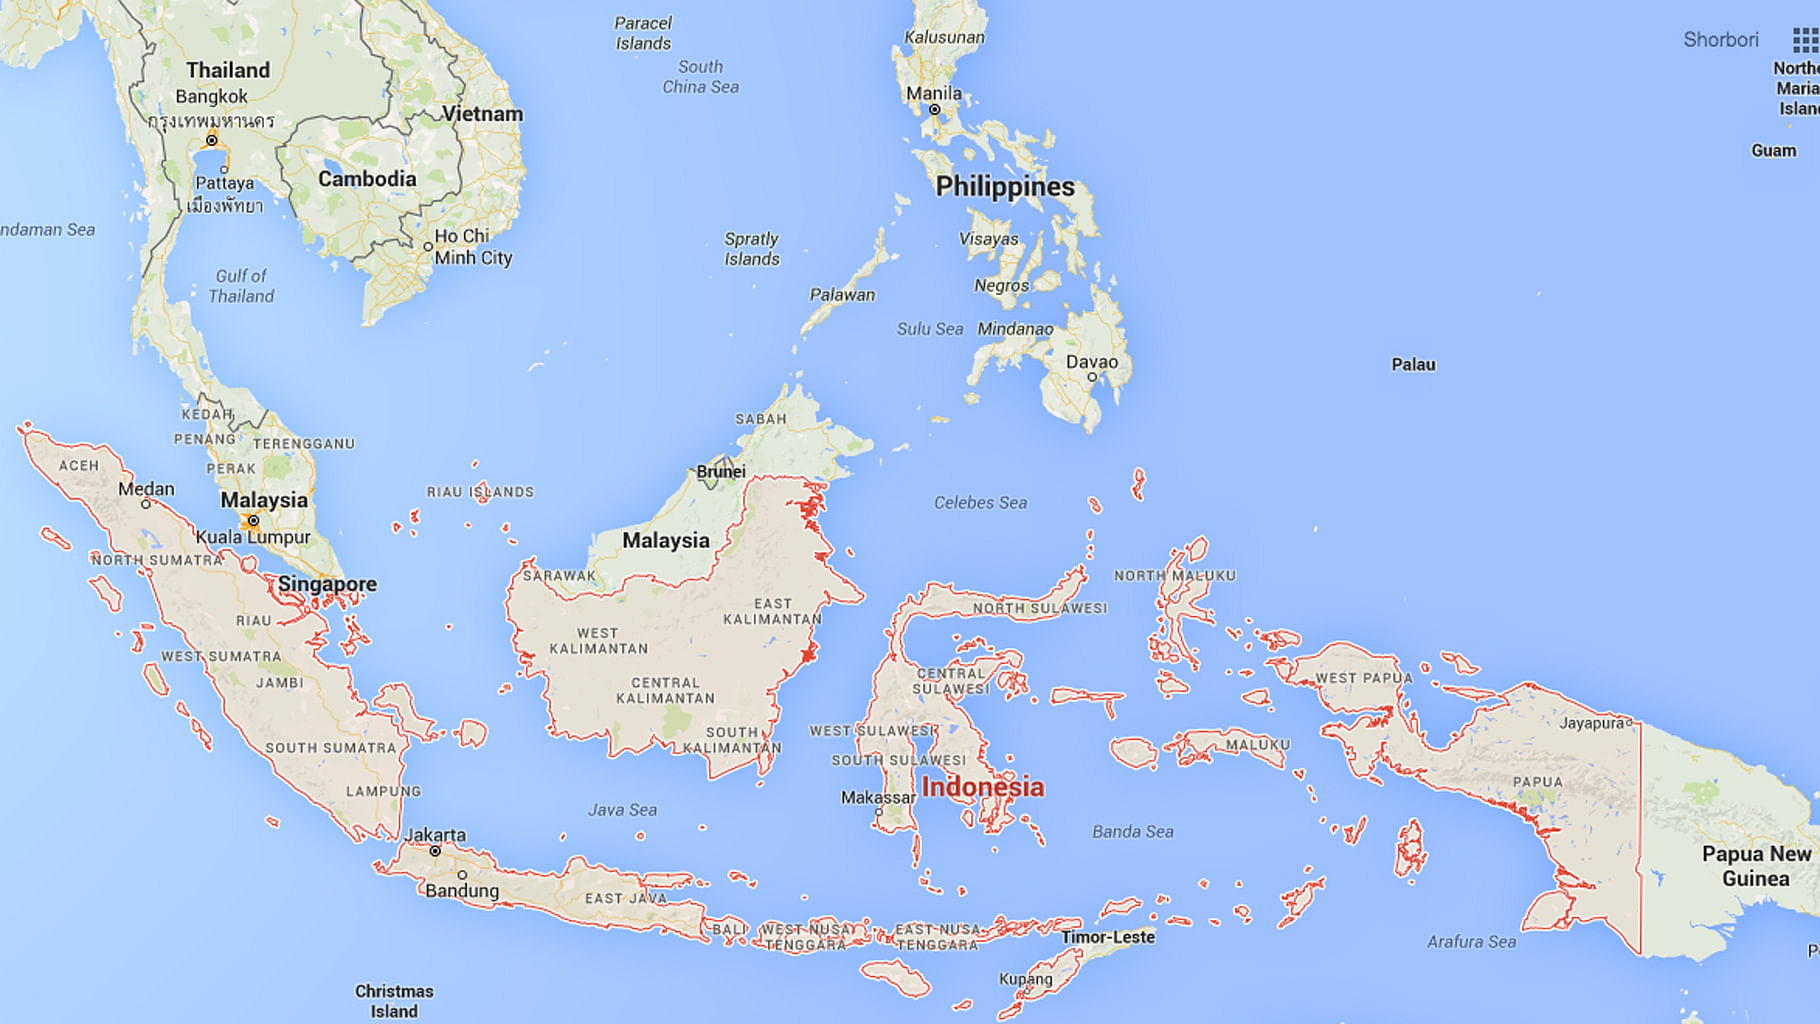 A shallow, powerful earthquake of magnitude 7.9 struck off the west coast of the Indonesian island of Sumatra. (Photo Courtesy: Google Maps)